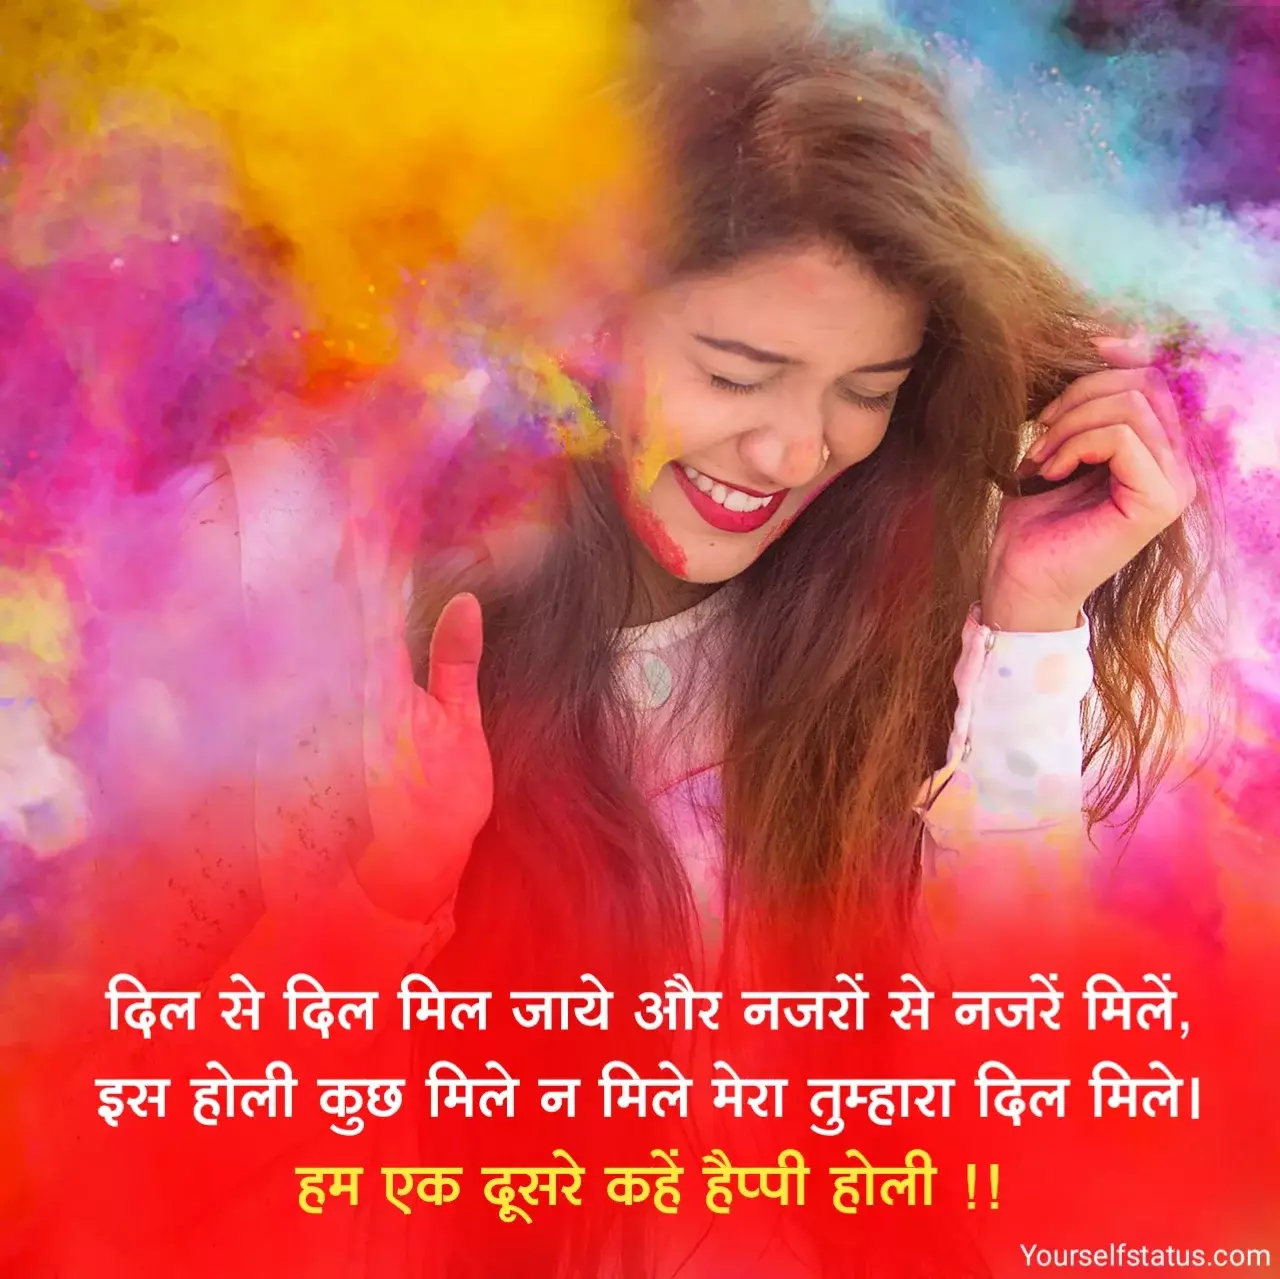 Holi wishes in hindi for girlfriend